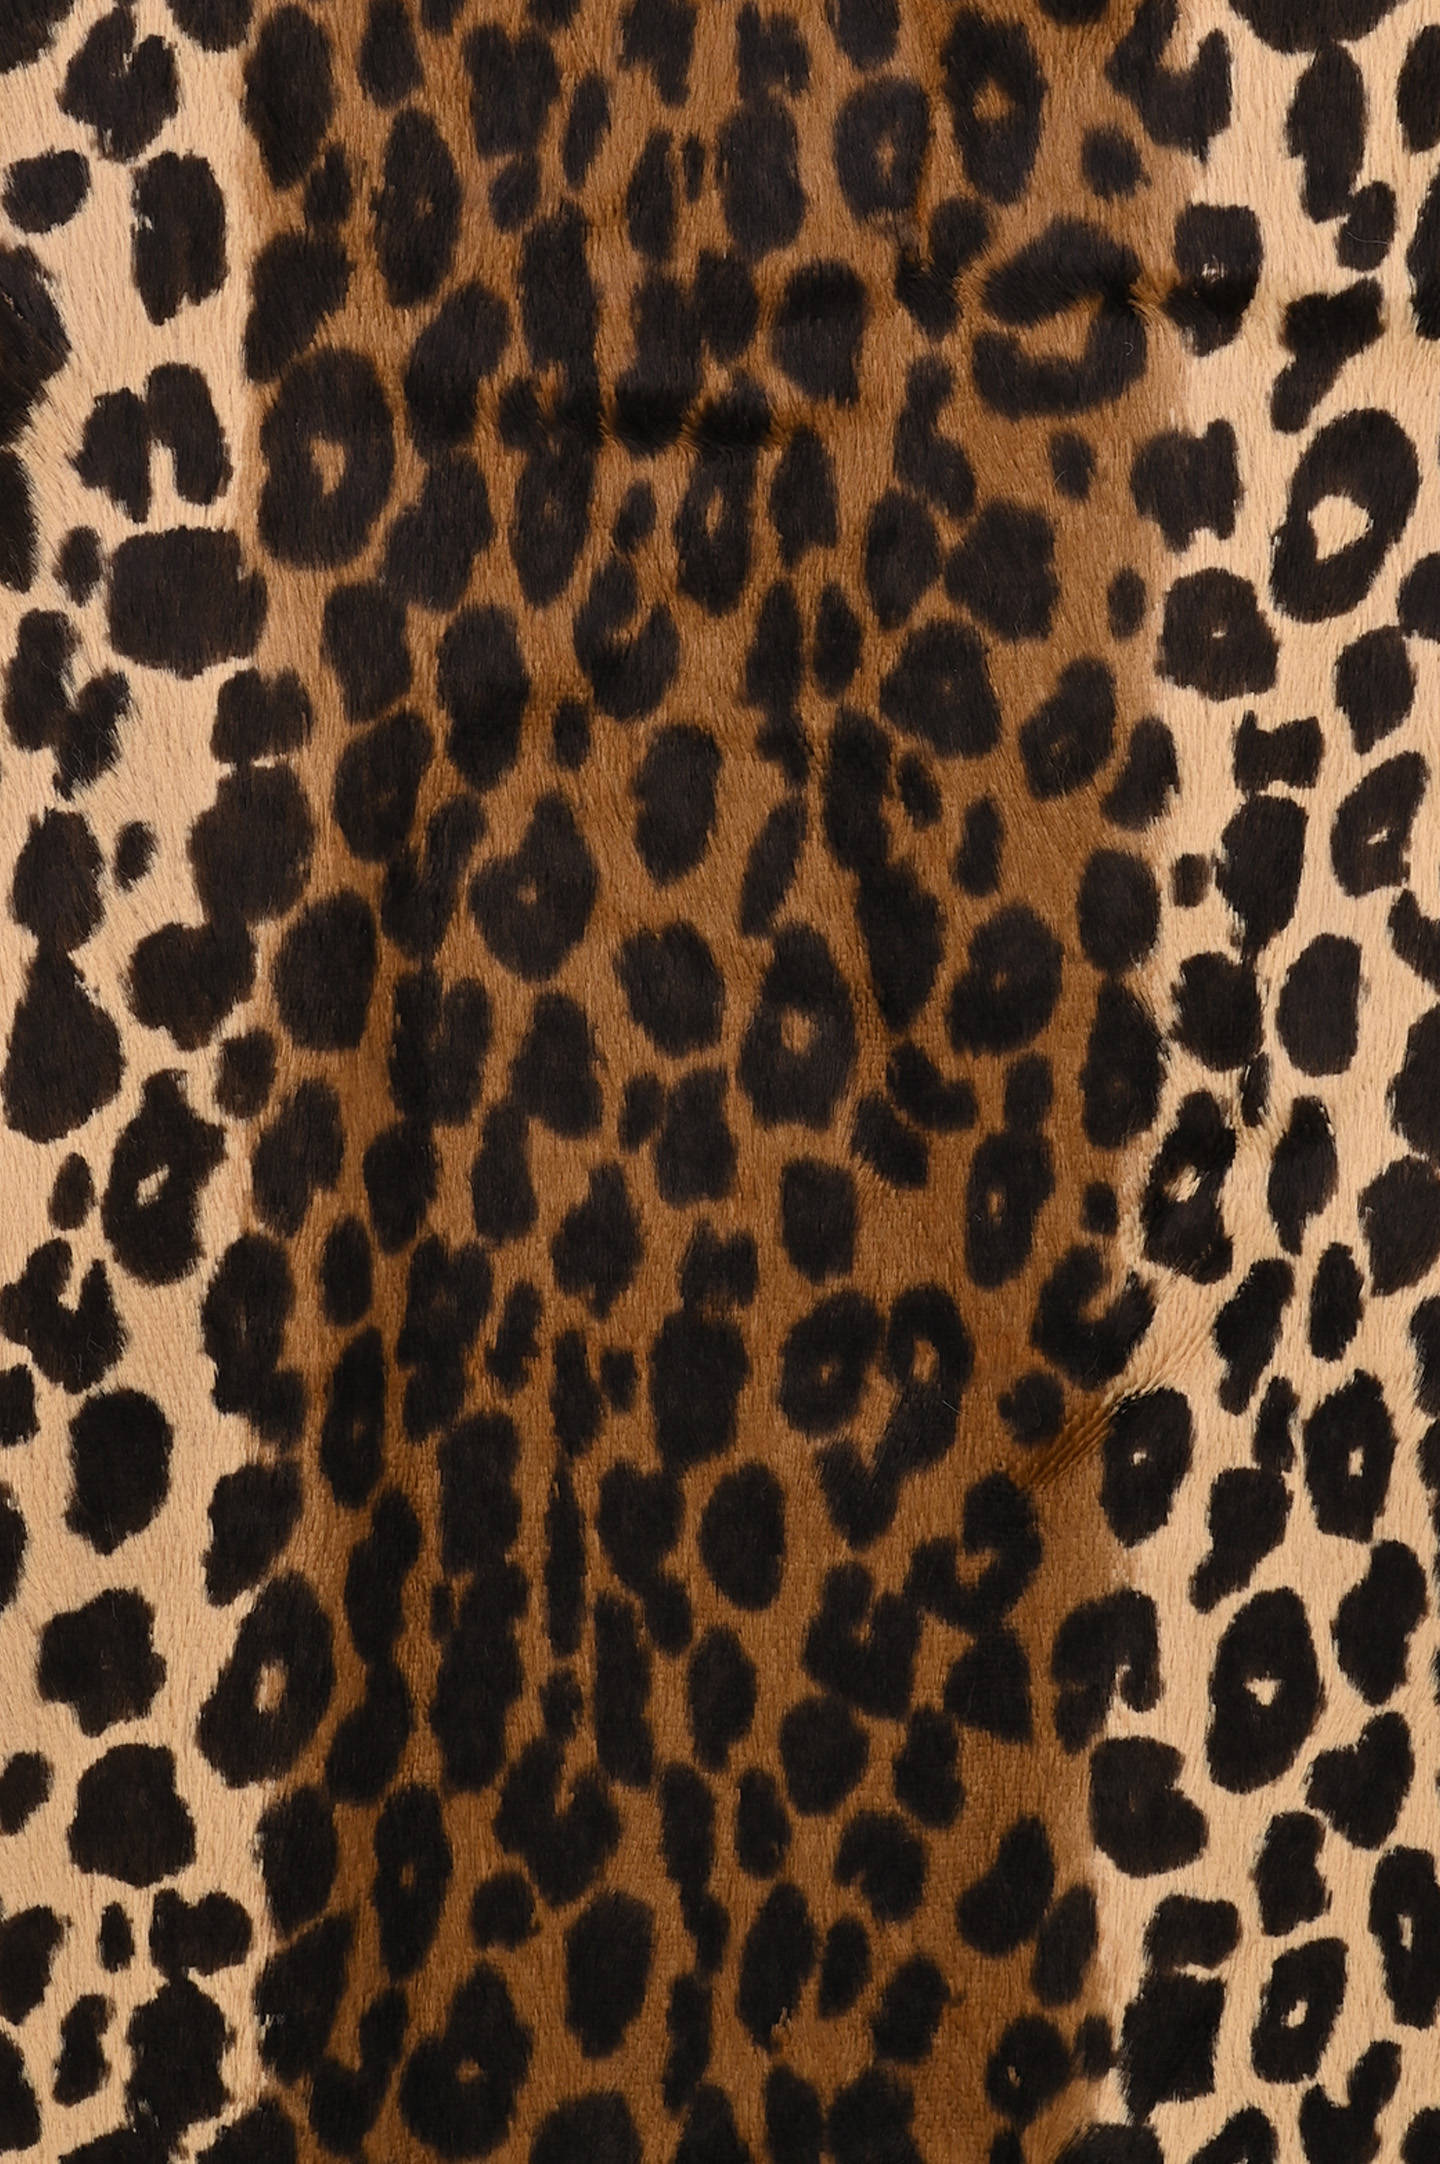 Куртка PHILOSOPHY DI LORENZO SERAFINI A0602 5757, цвет: Леопардовый, Женский